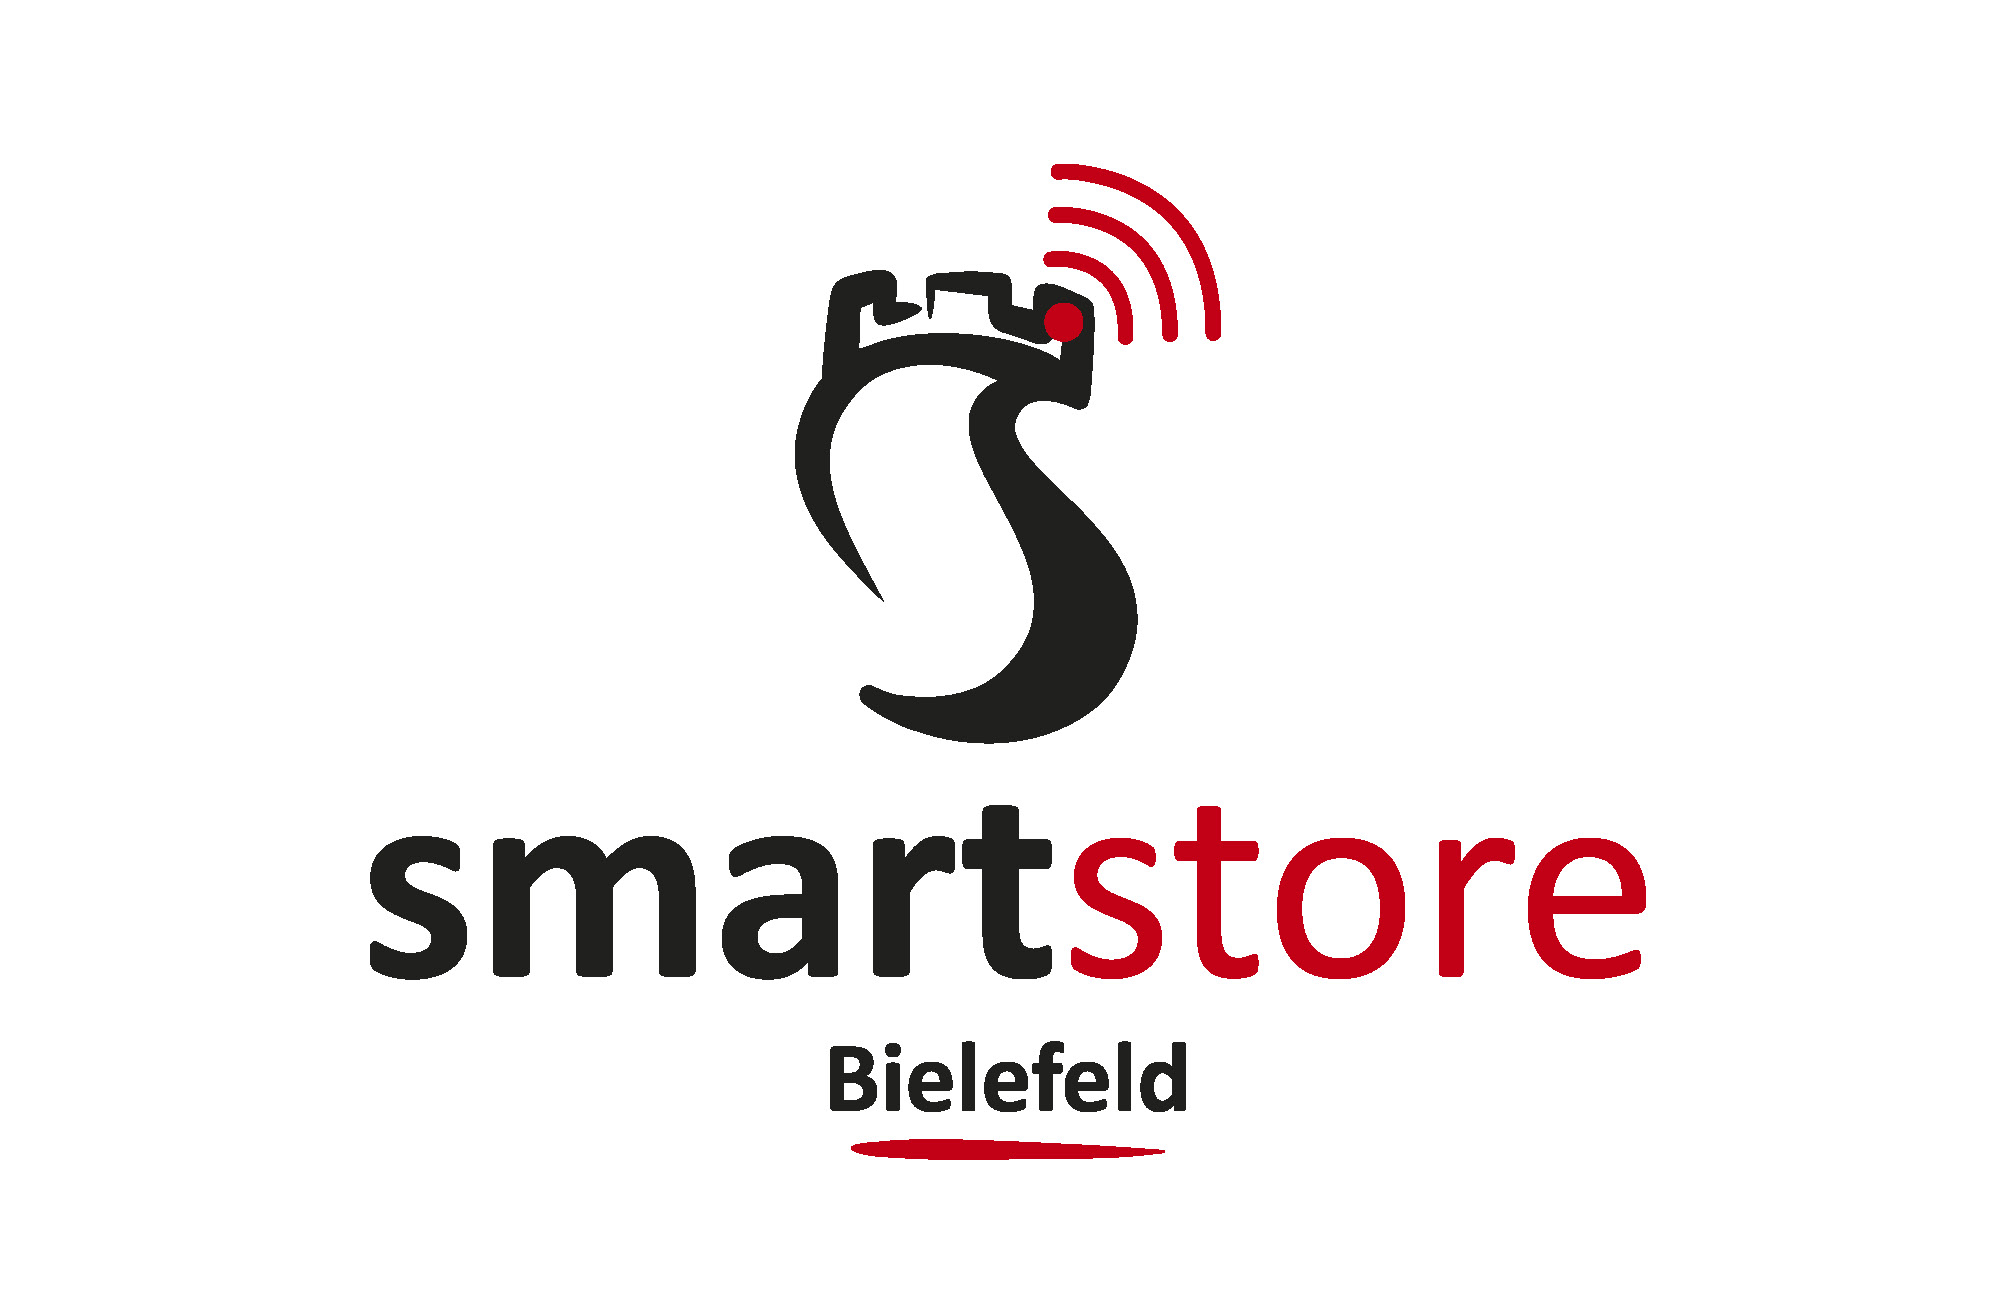 Smart Store Bielefeld (Emyase GmbH)